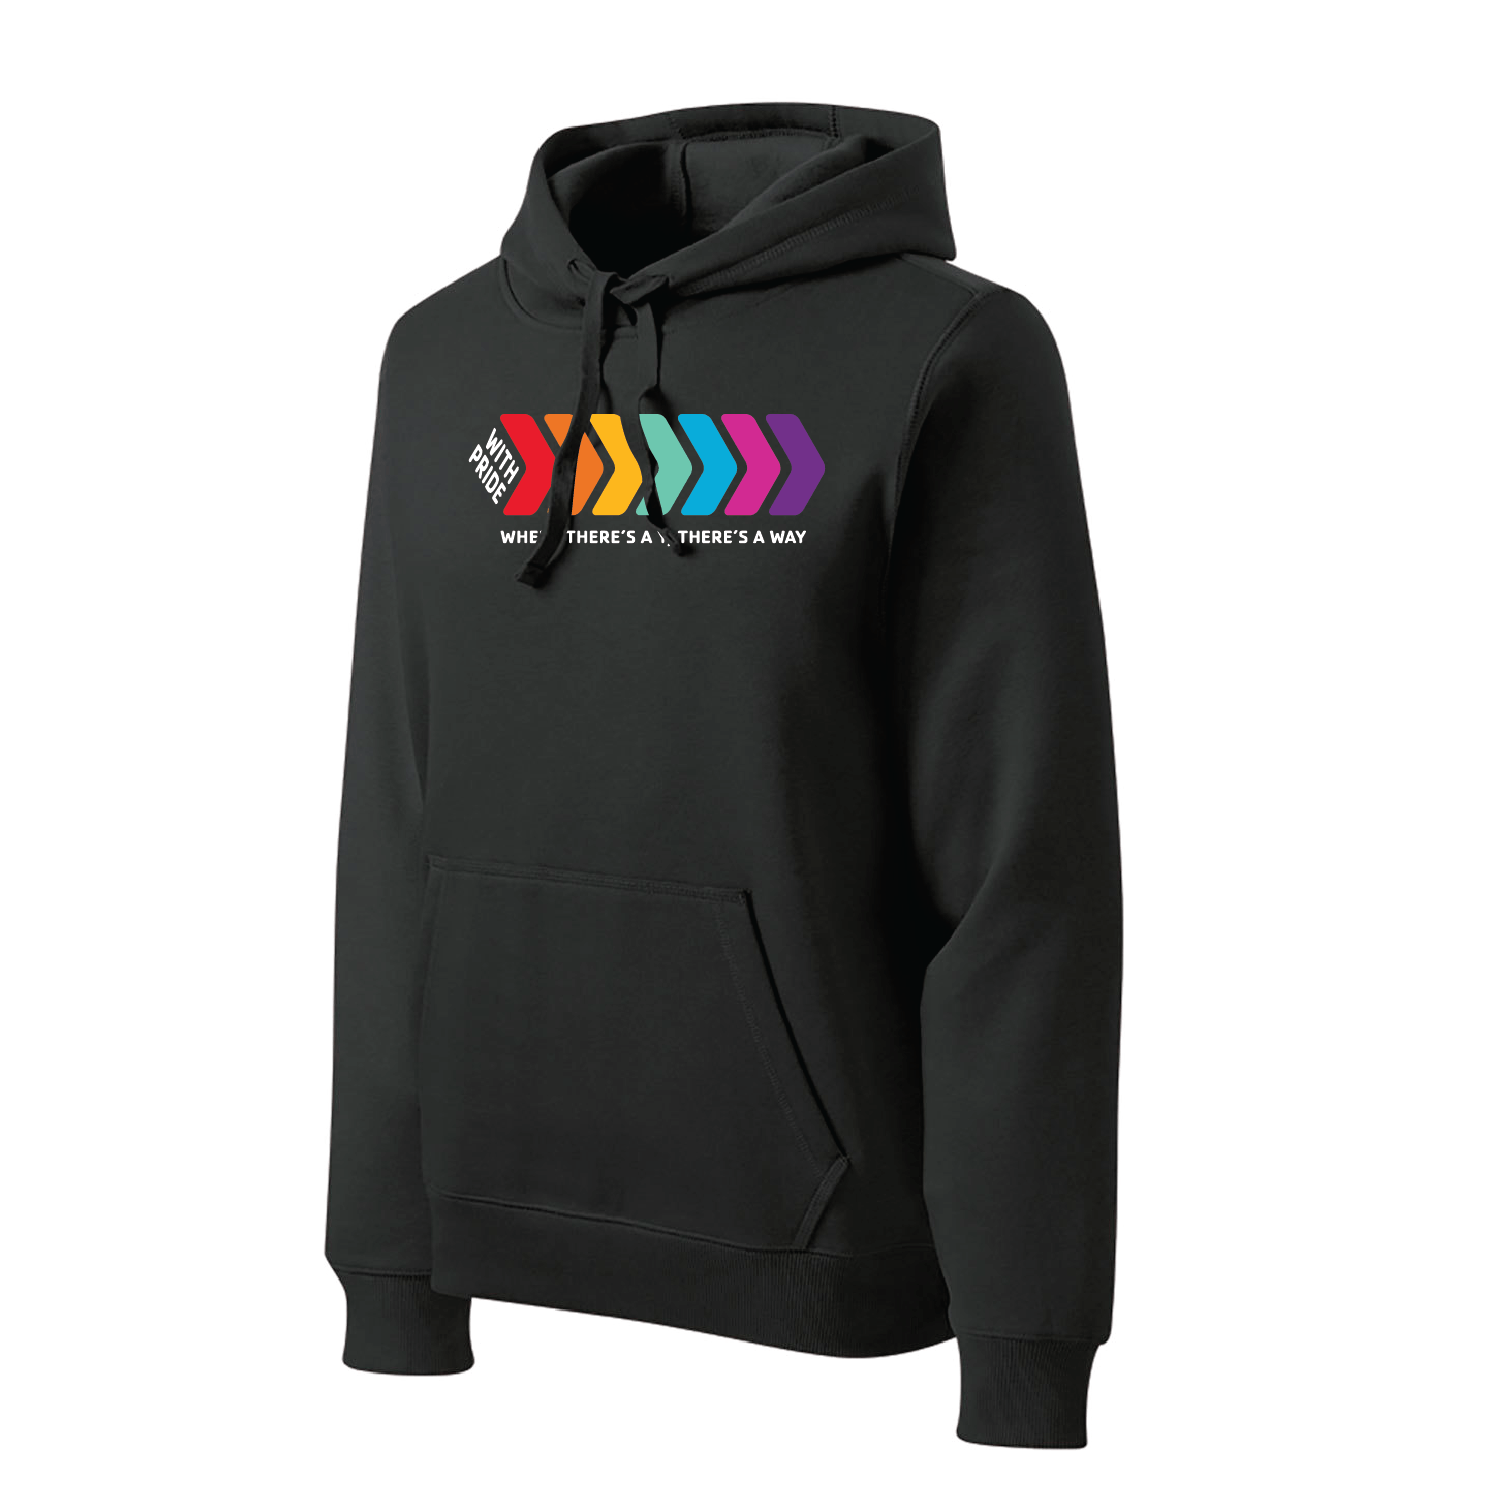 YMCA Pride Unisex Pullover Hooded Sweatshirt - DSP On Demand